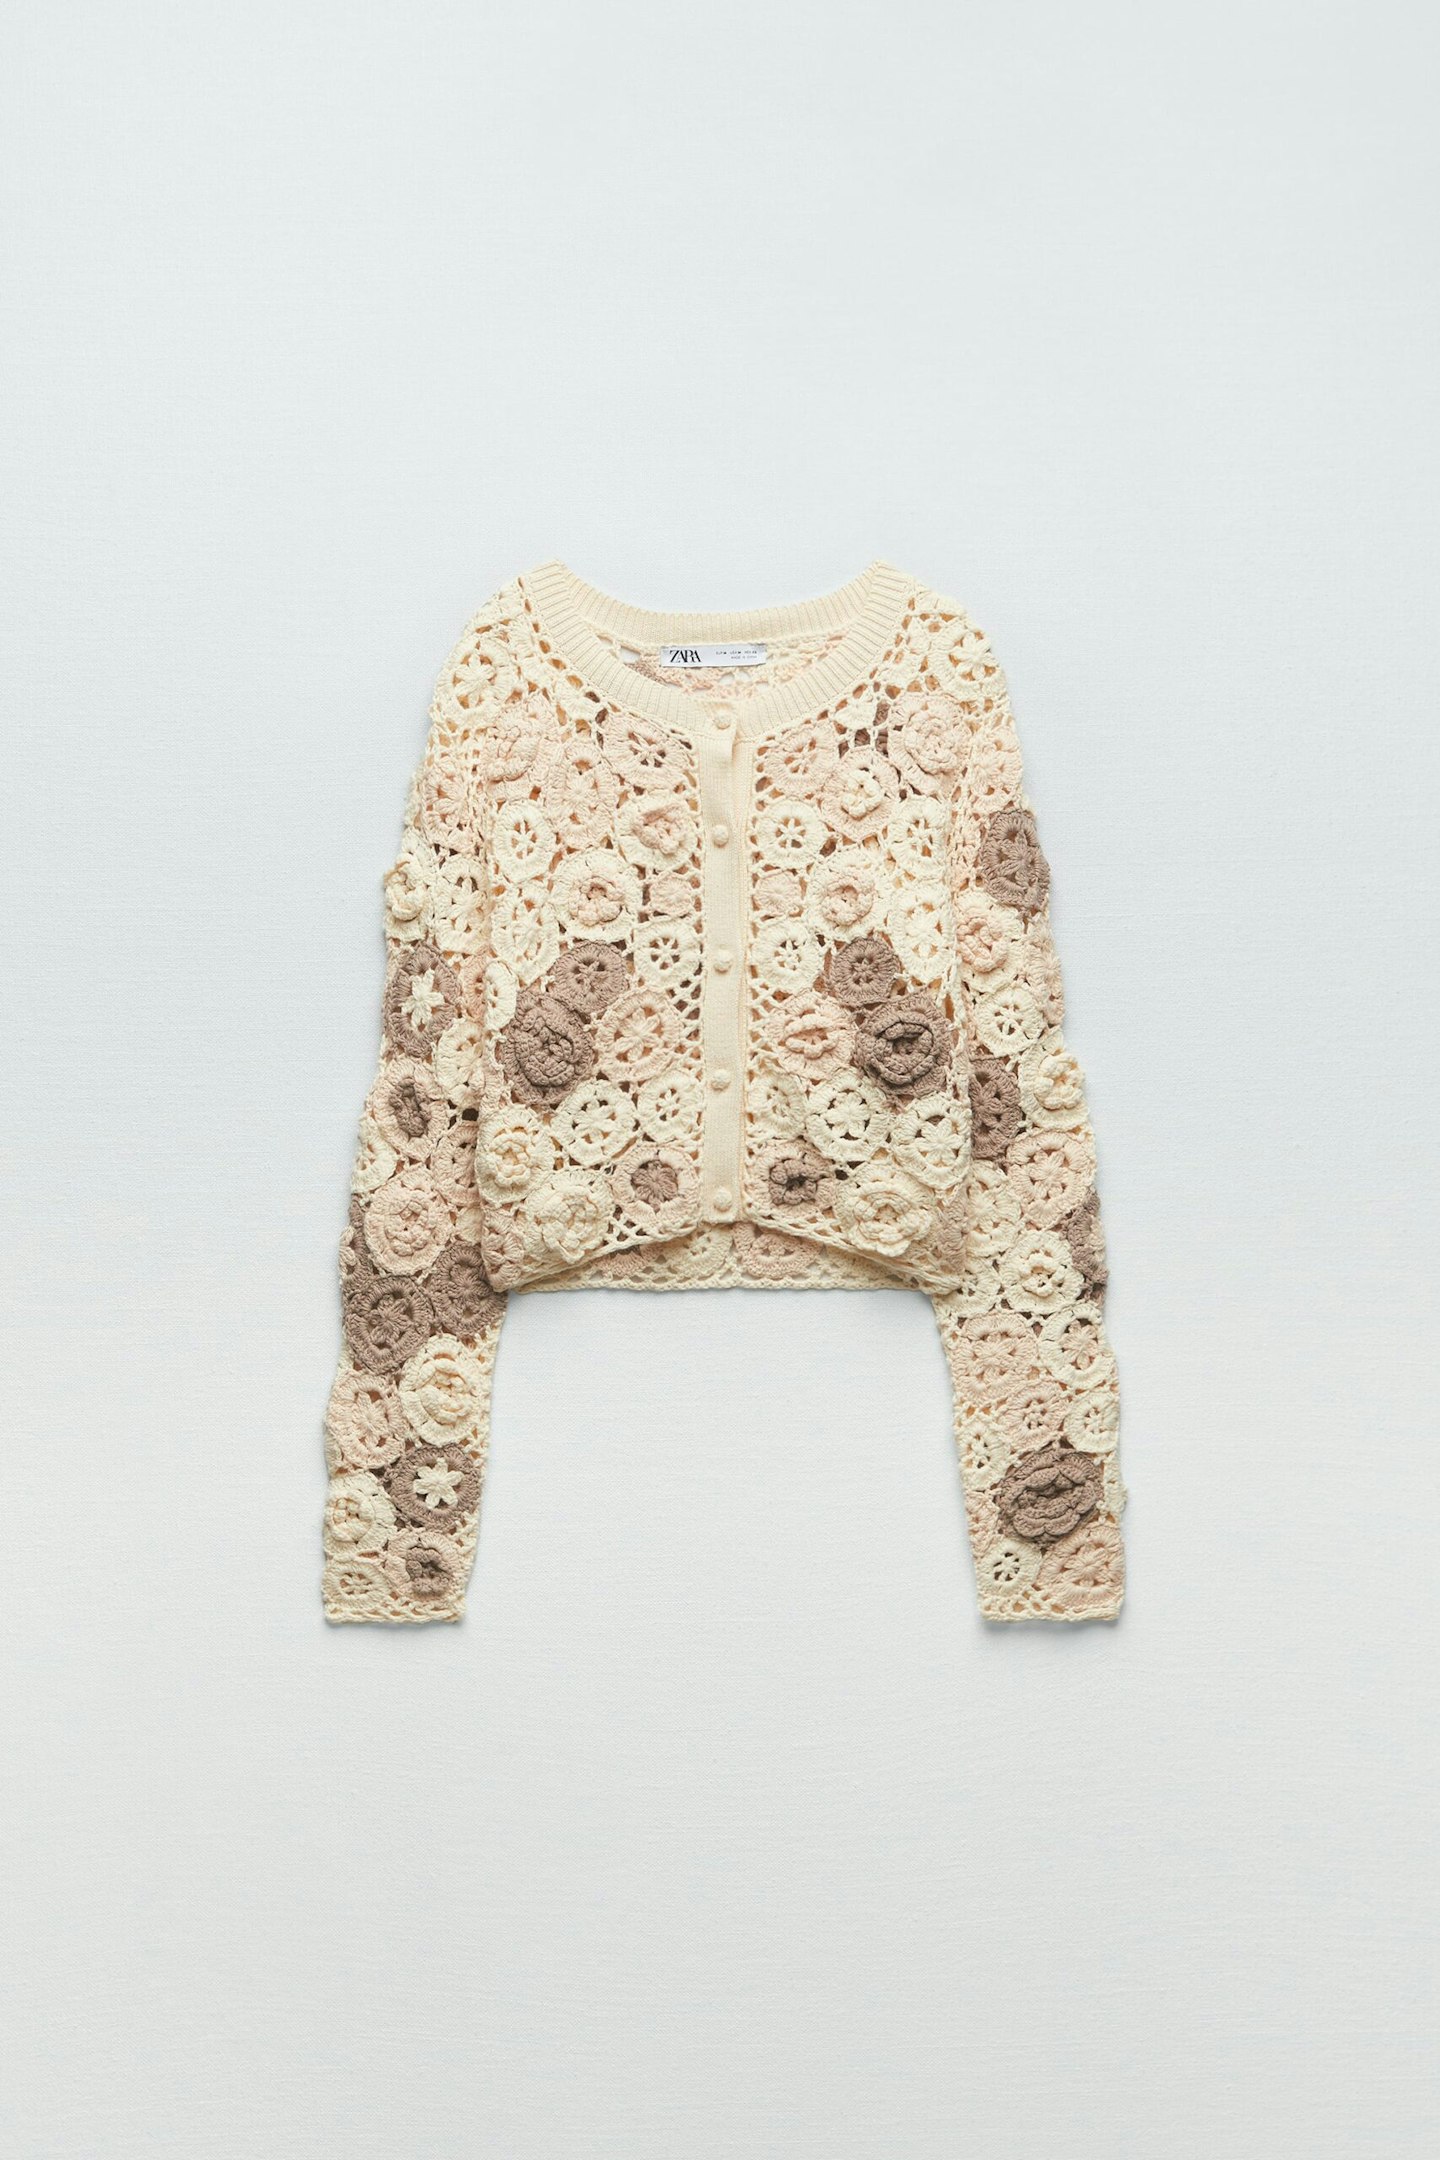 Zara, Floral Crochet Cardigan